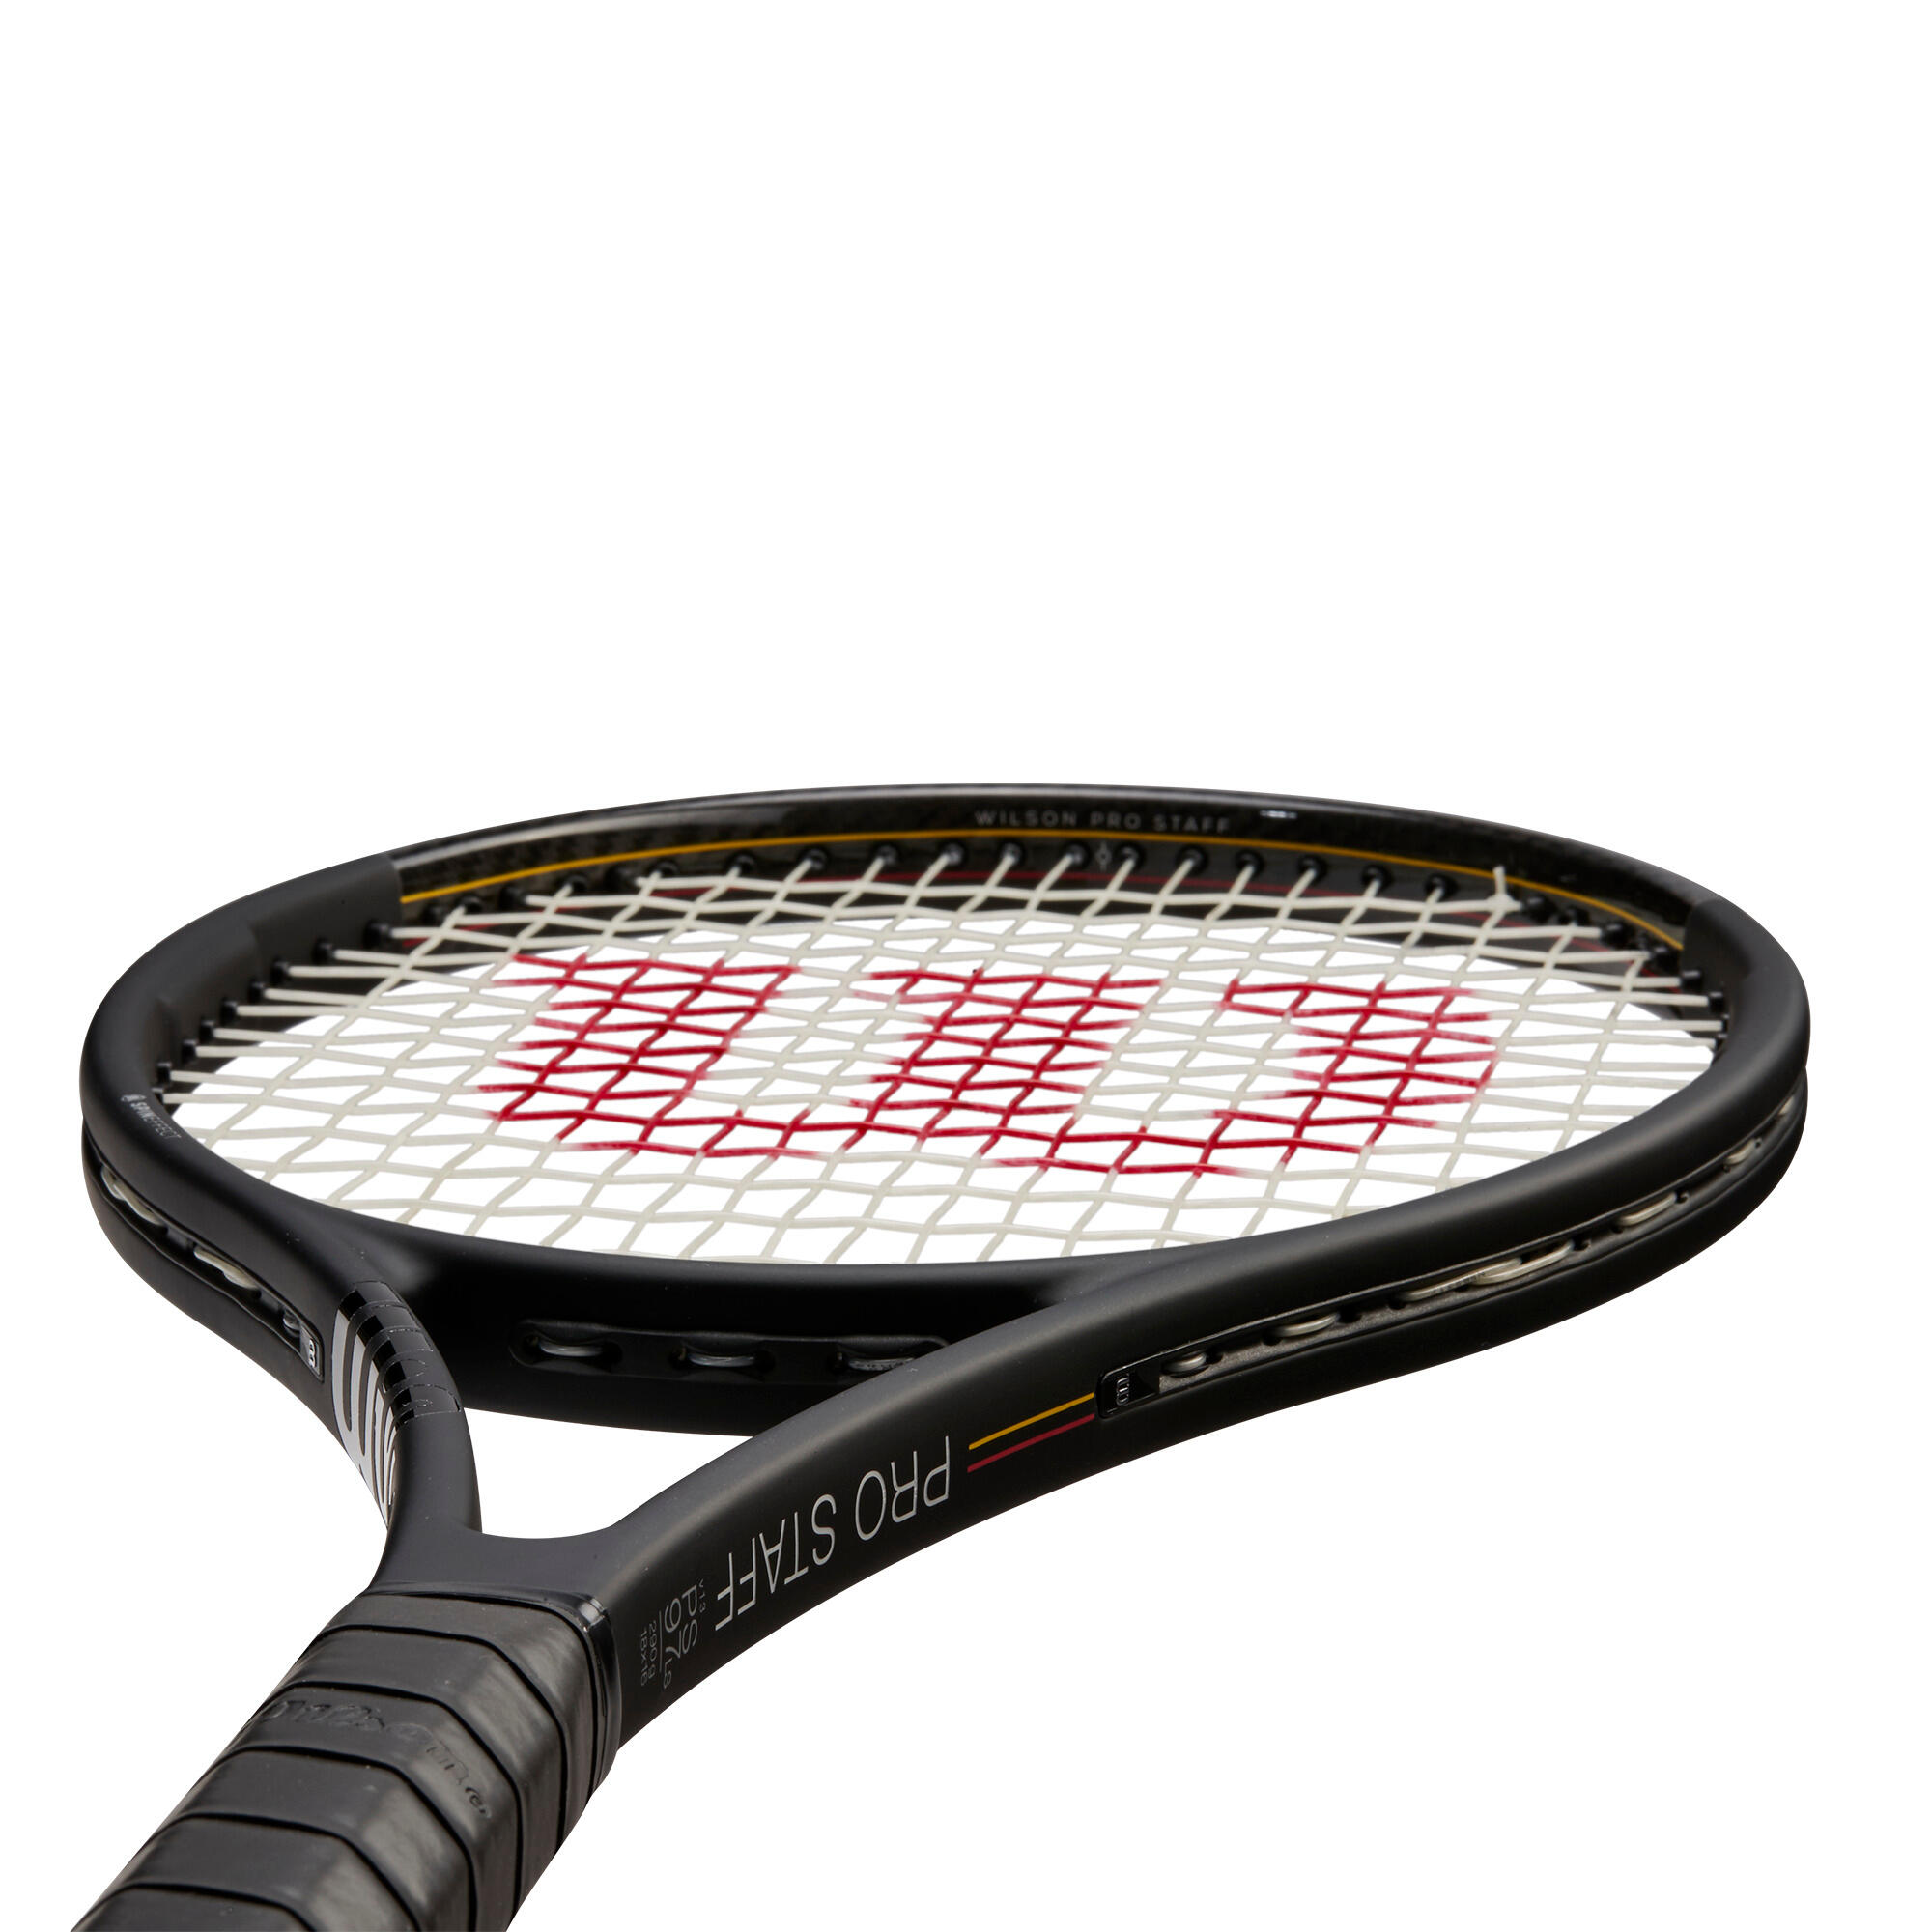 Adult Tennis Racket Pro Staff 97LS V13 290g - Black 6/7